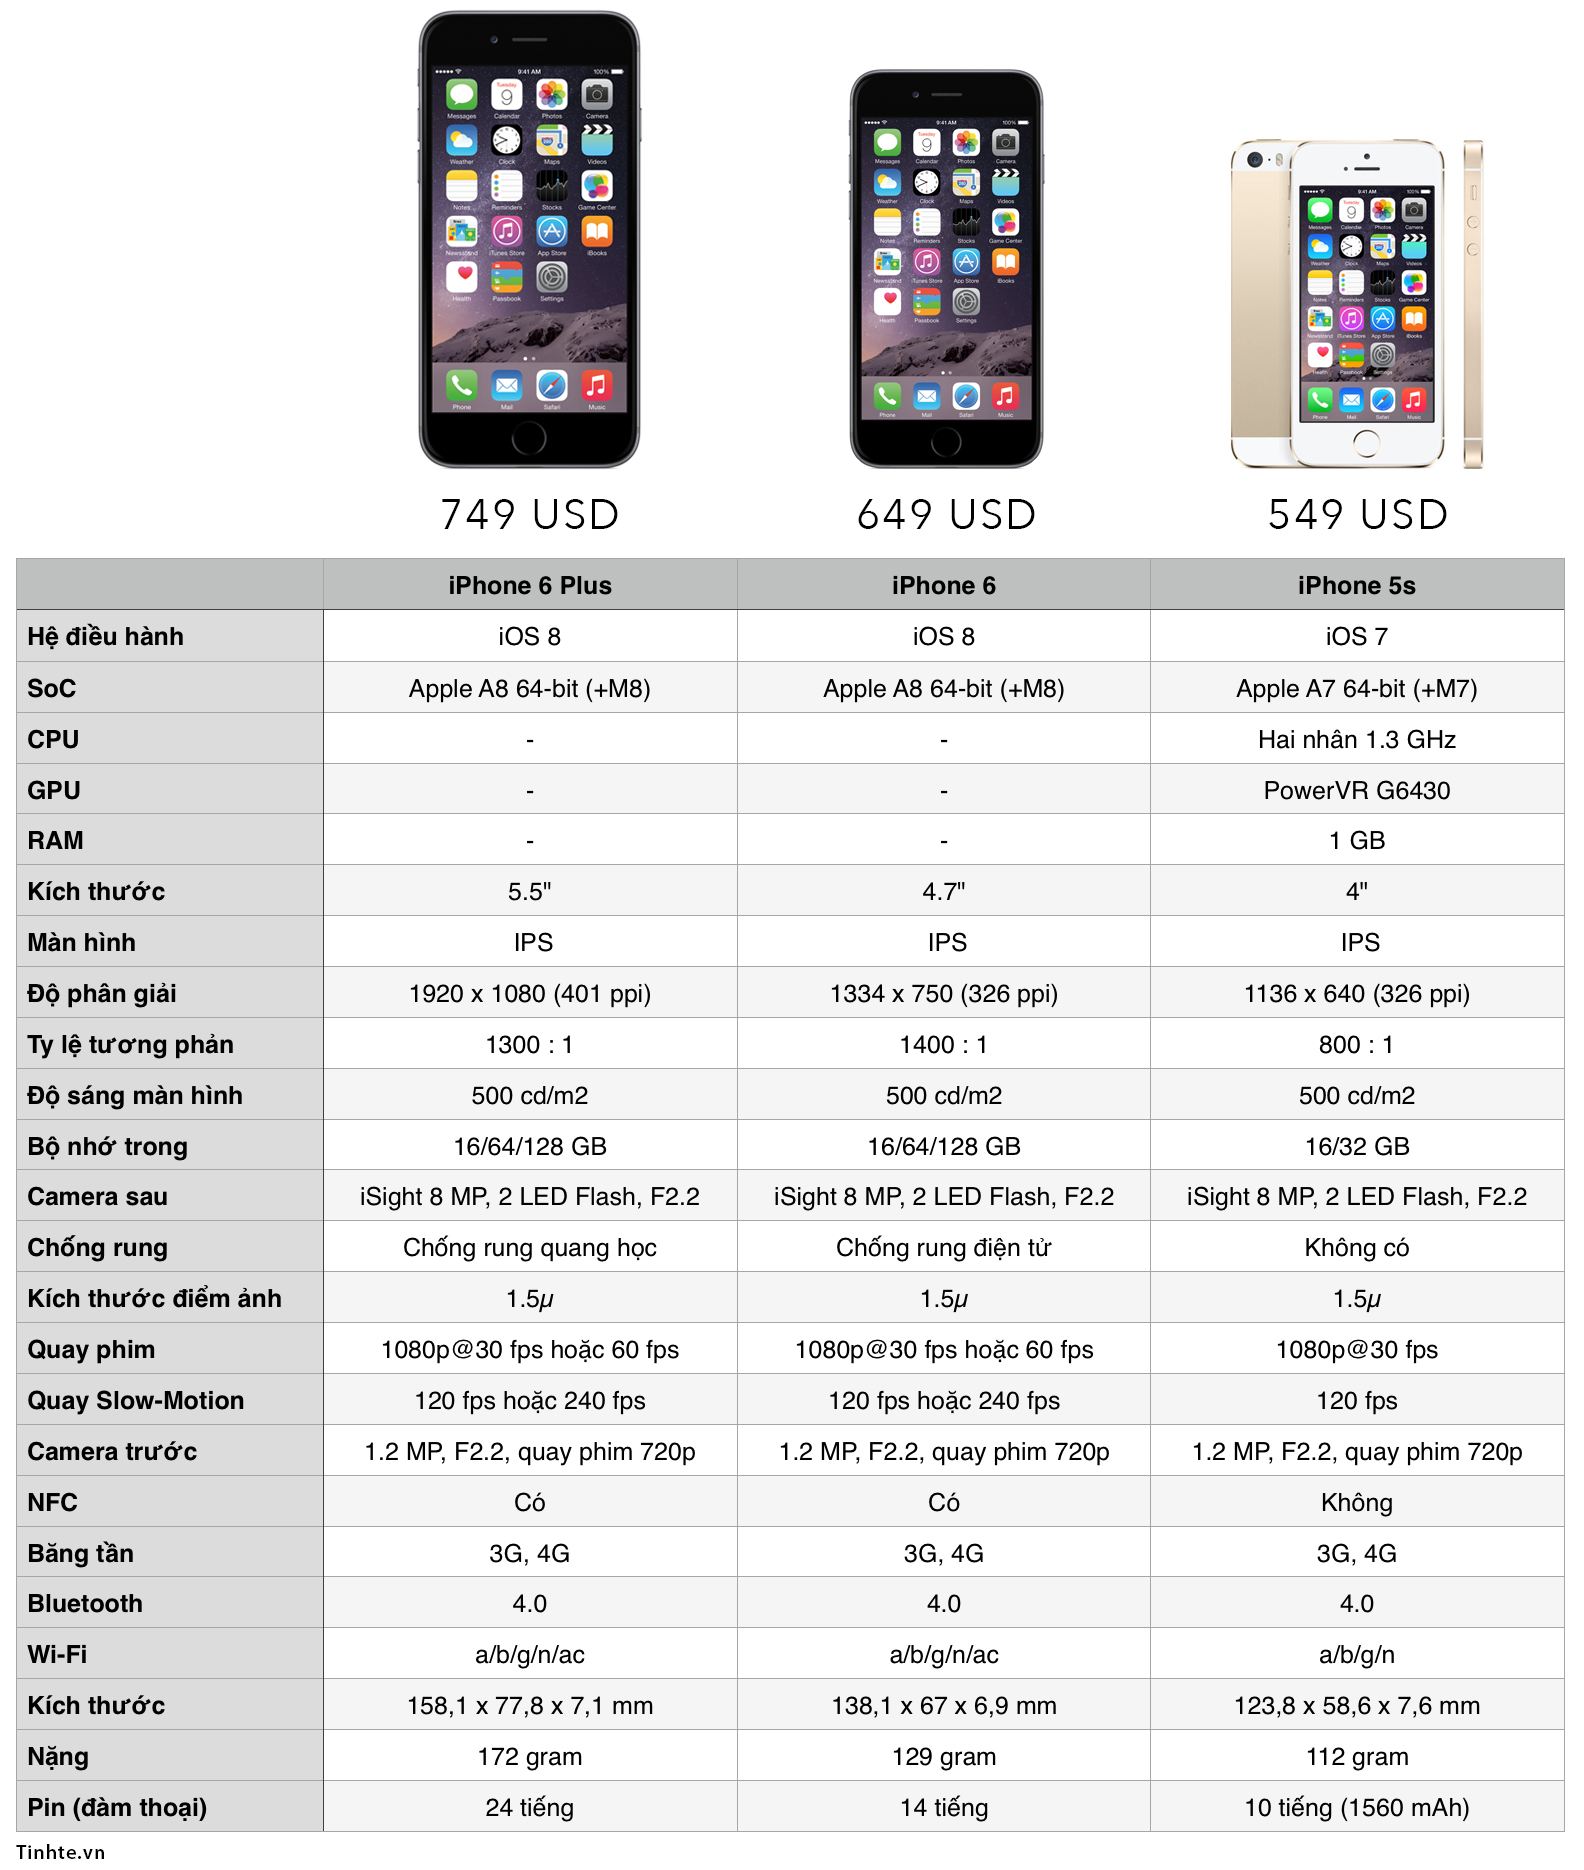 iPhone SE đọ cấu hình iPhone 6s, 5s